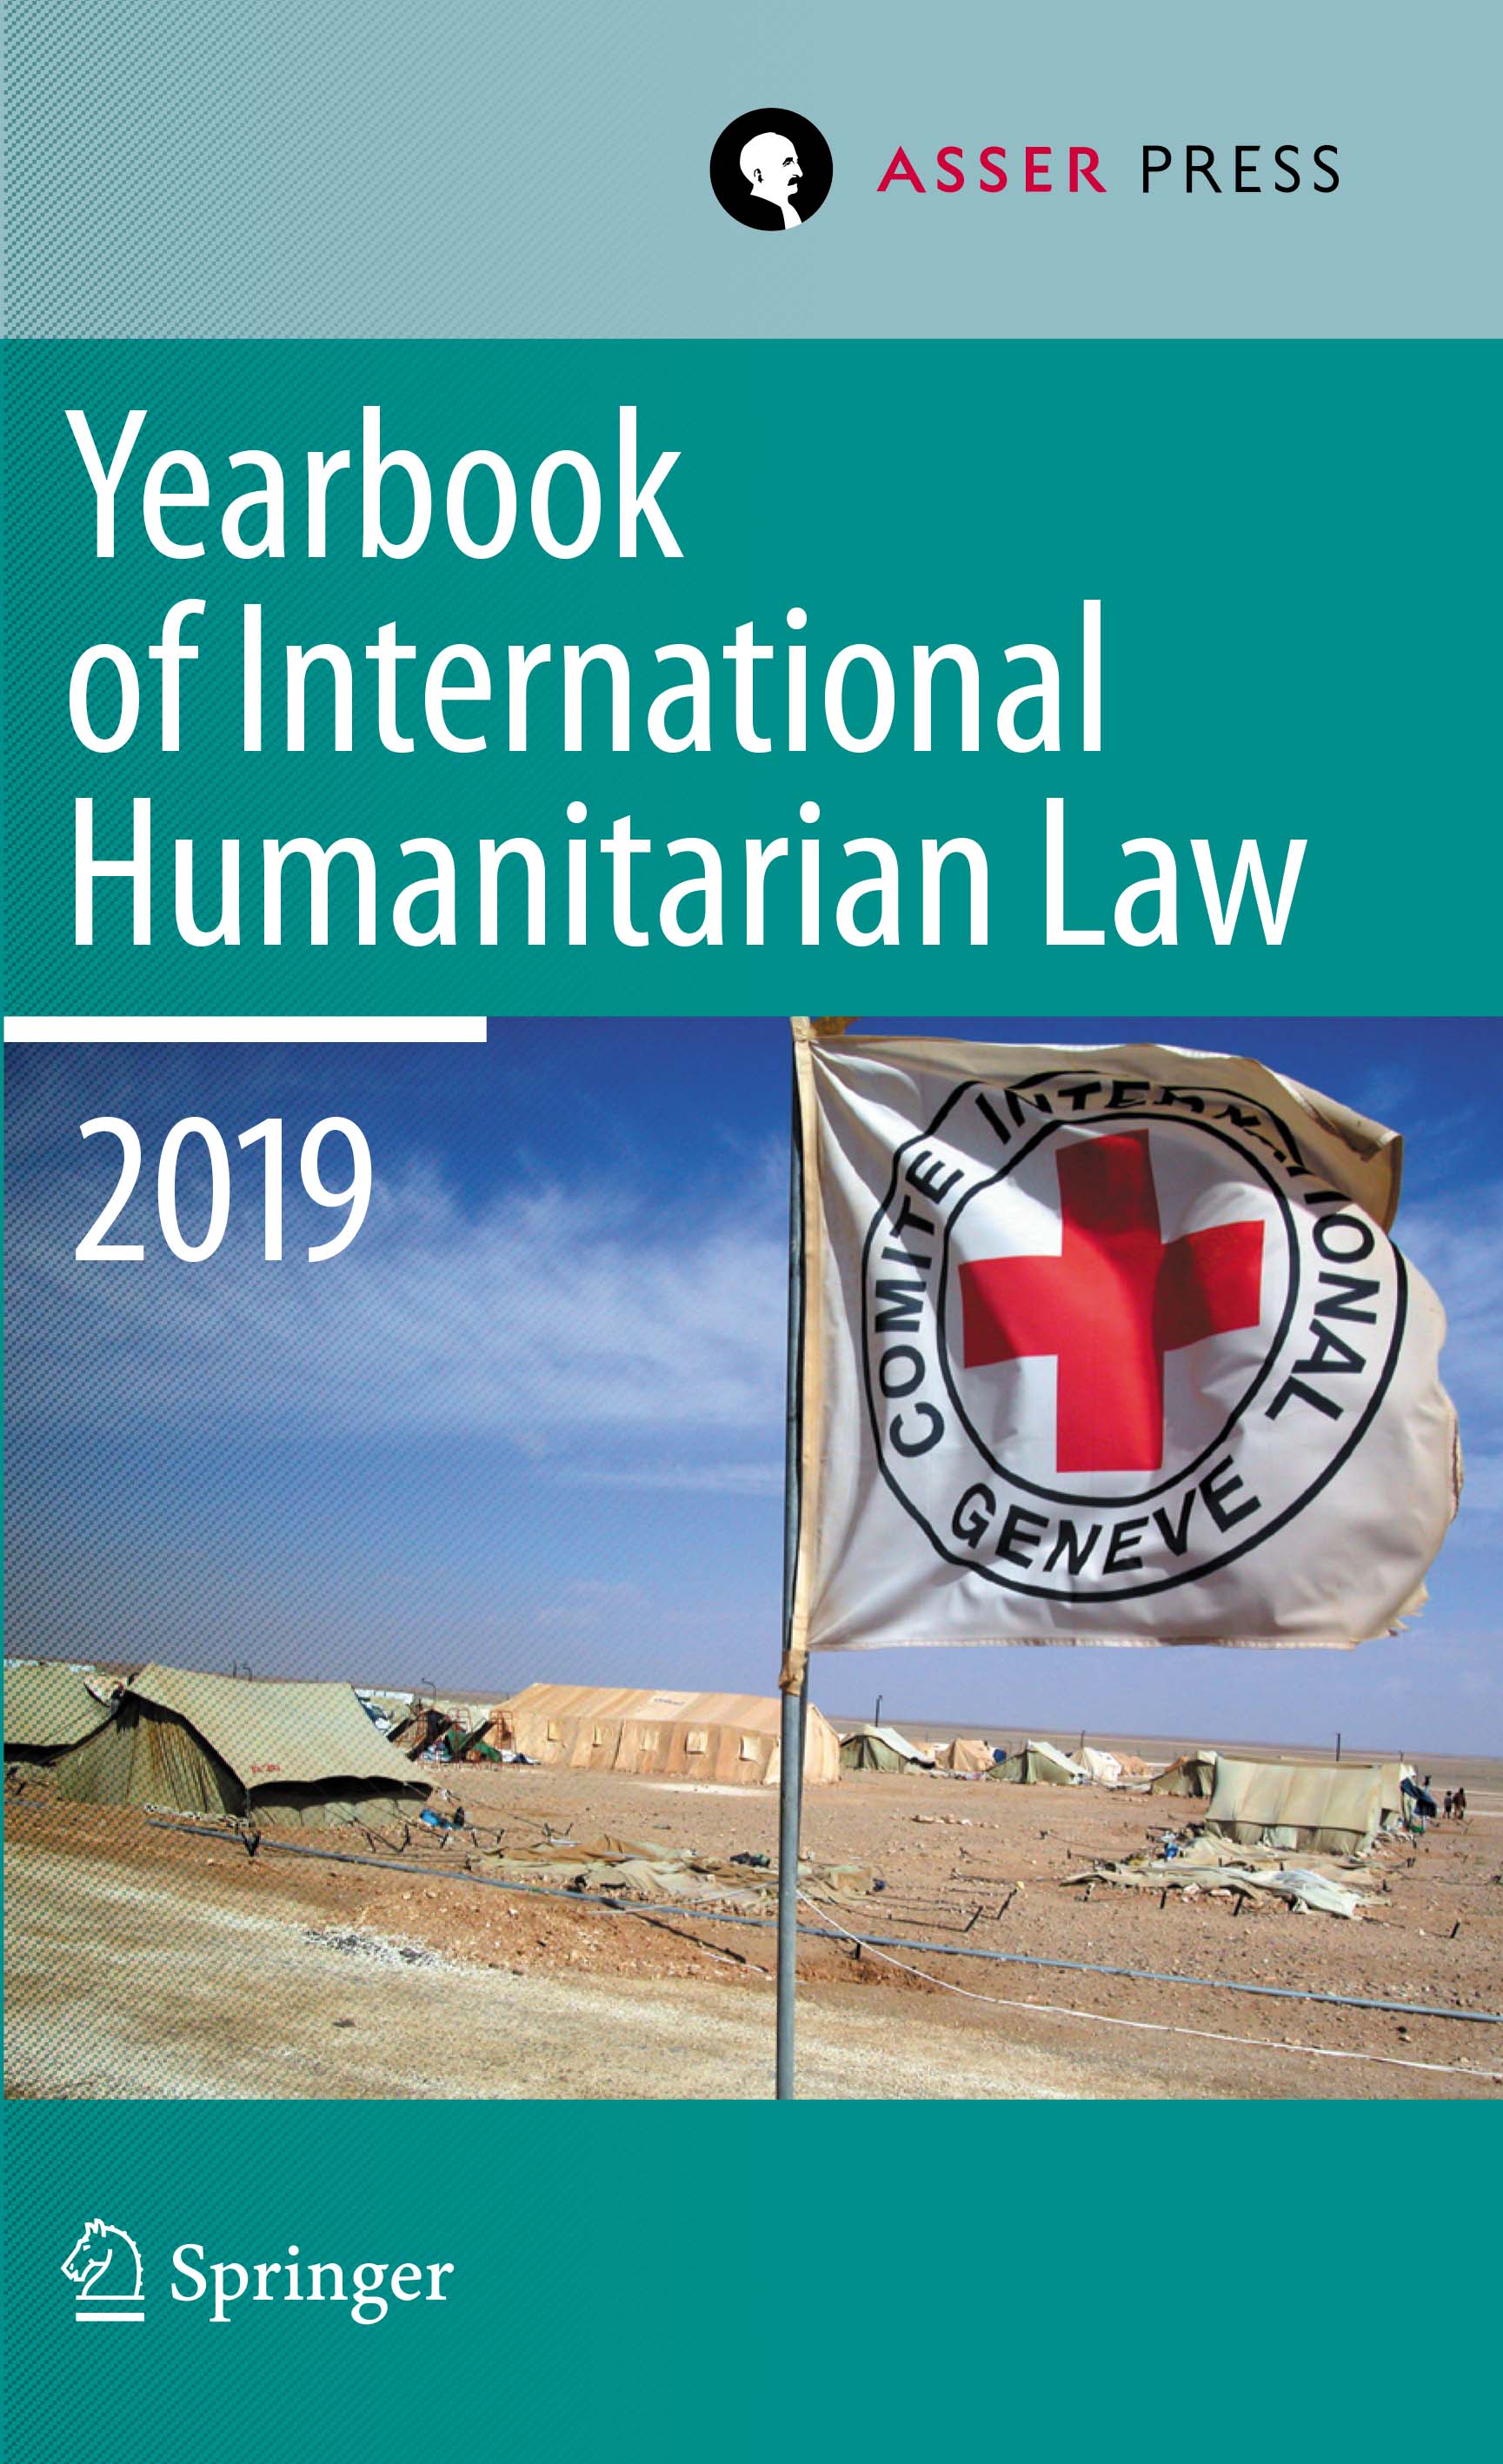 Yearbook of International Humanitarian Law, Volume 22, 2019 